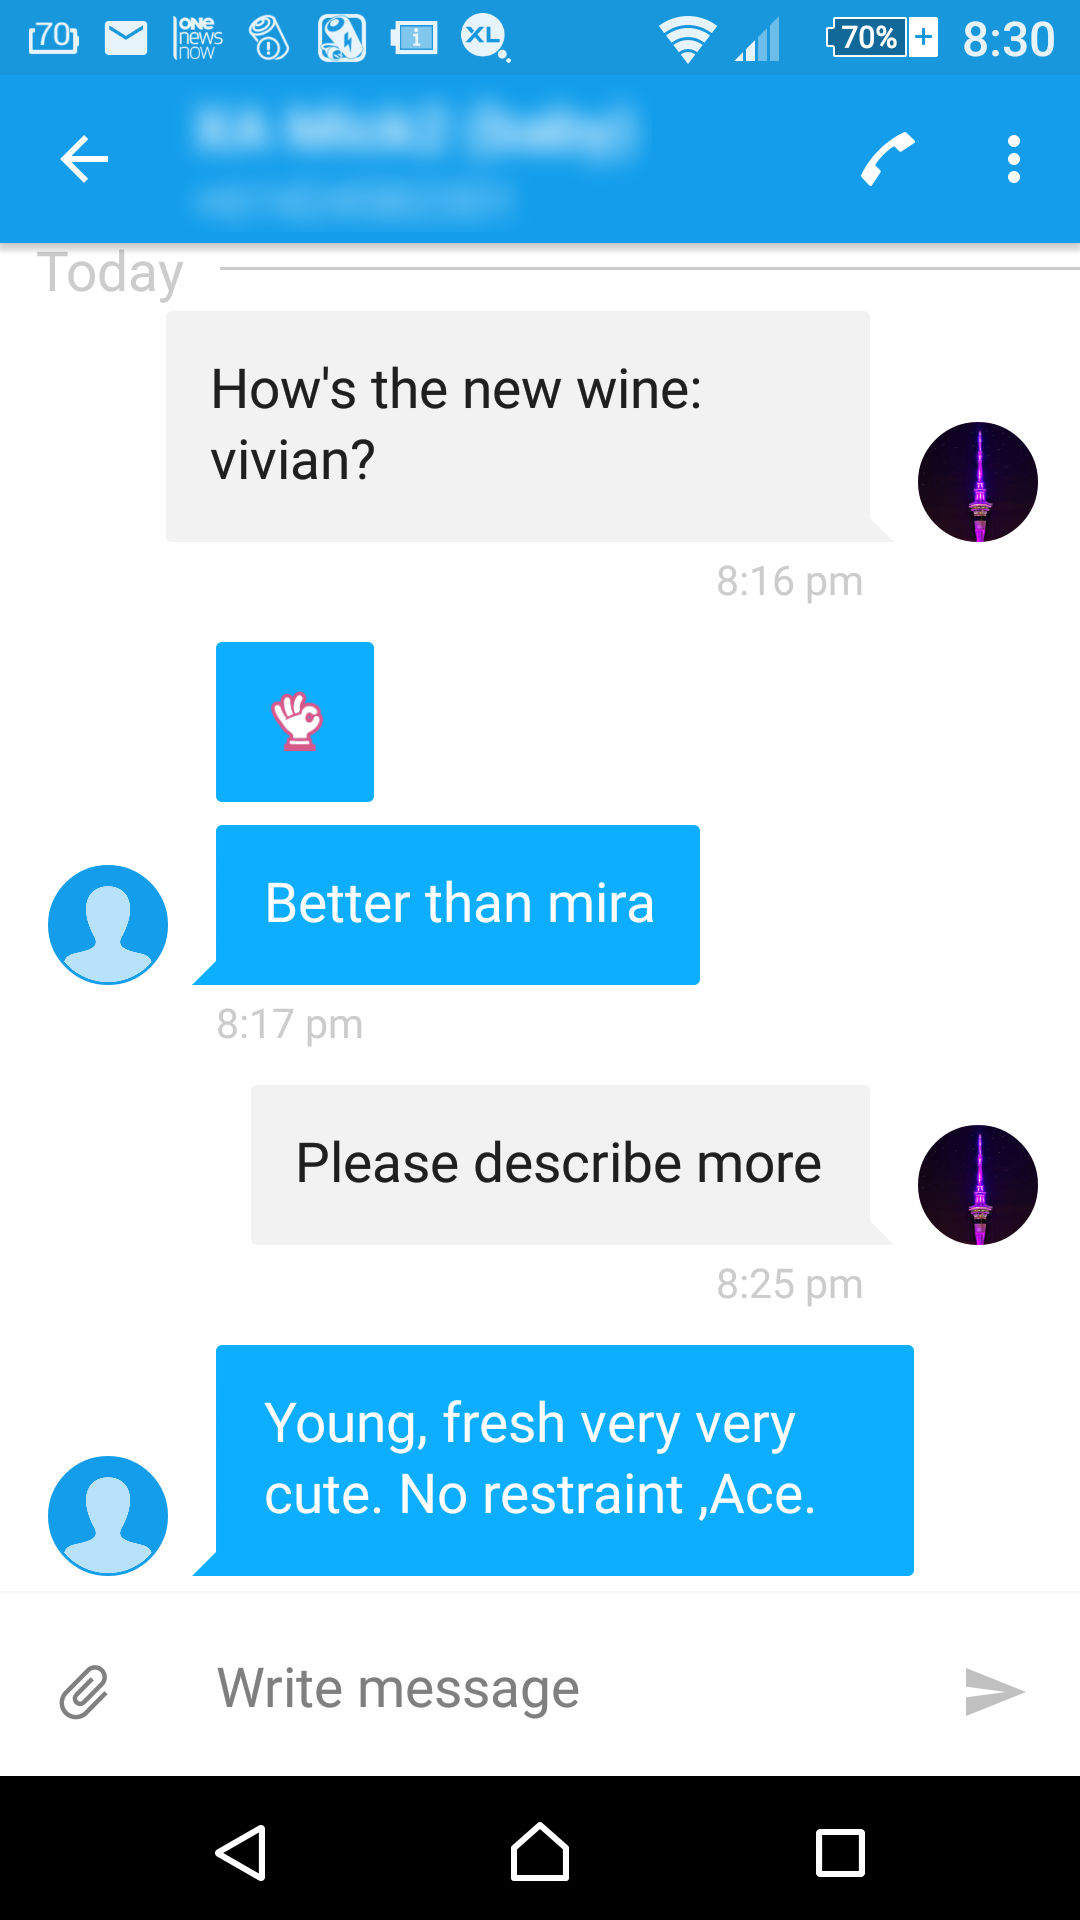 Thai Vivian feedback